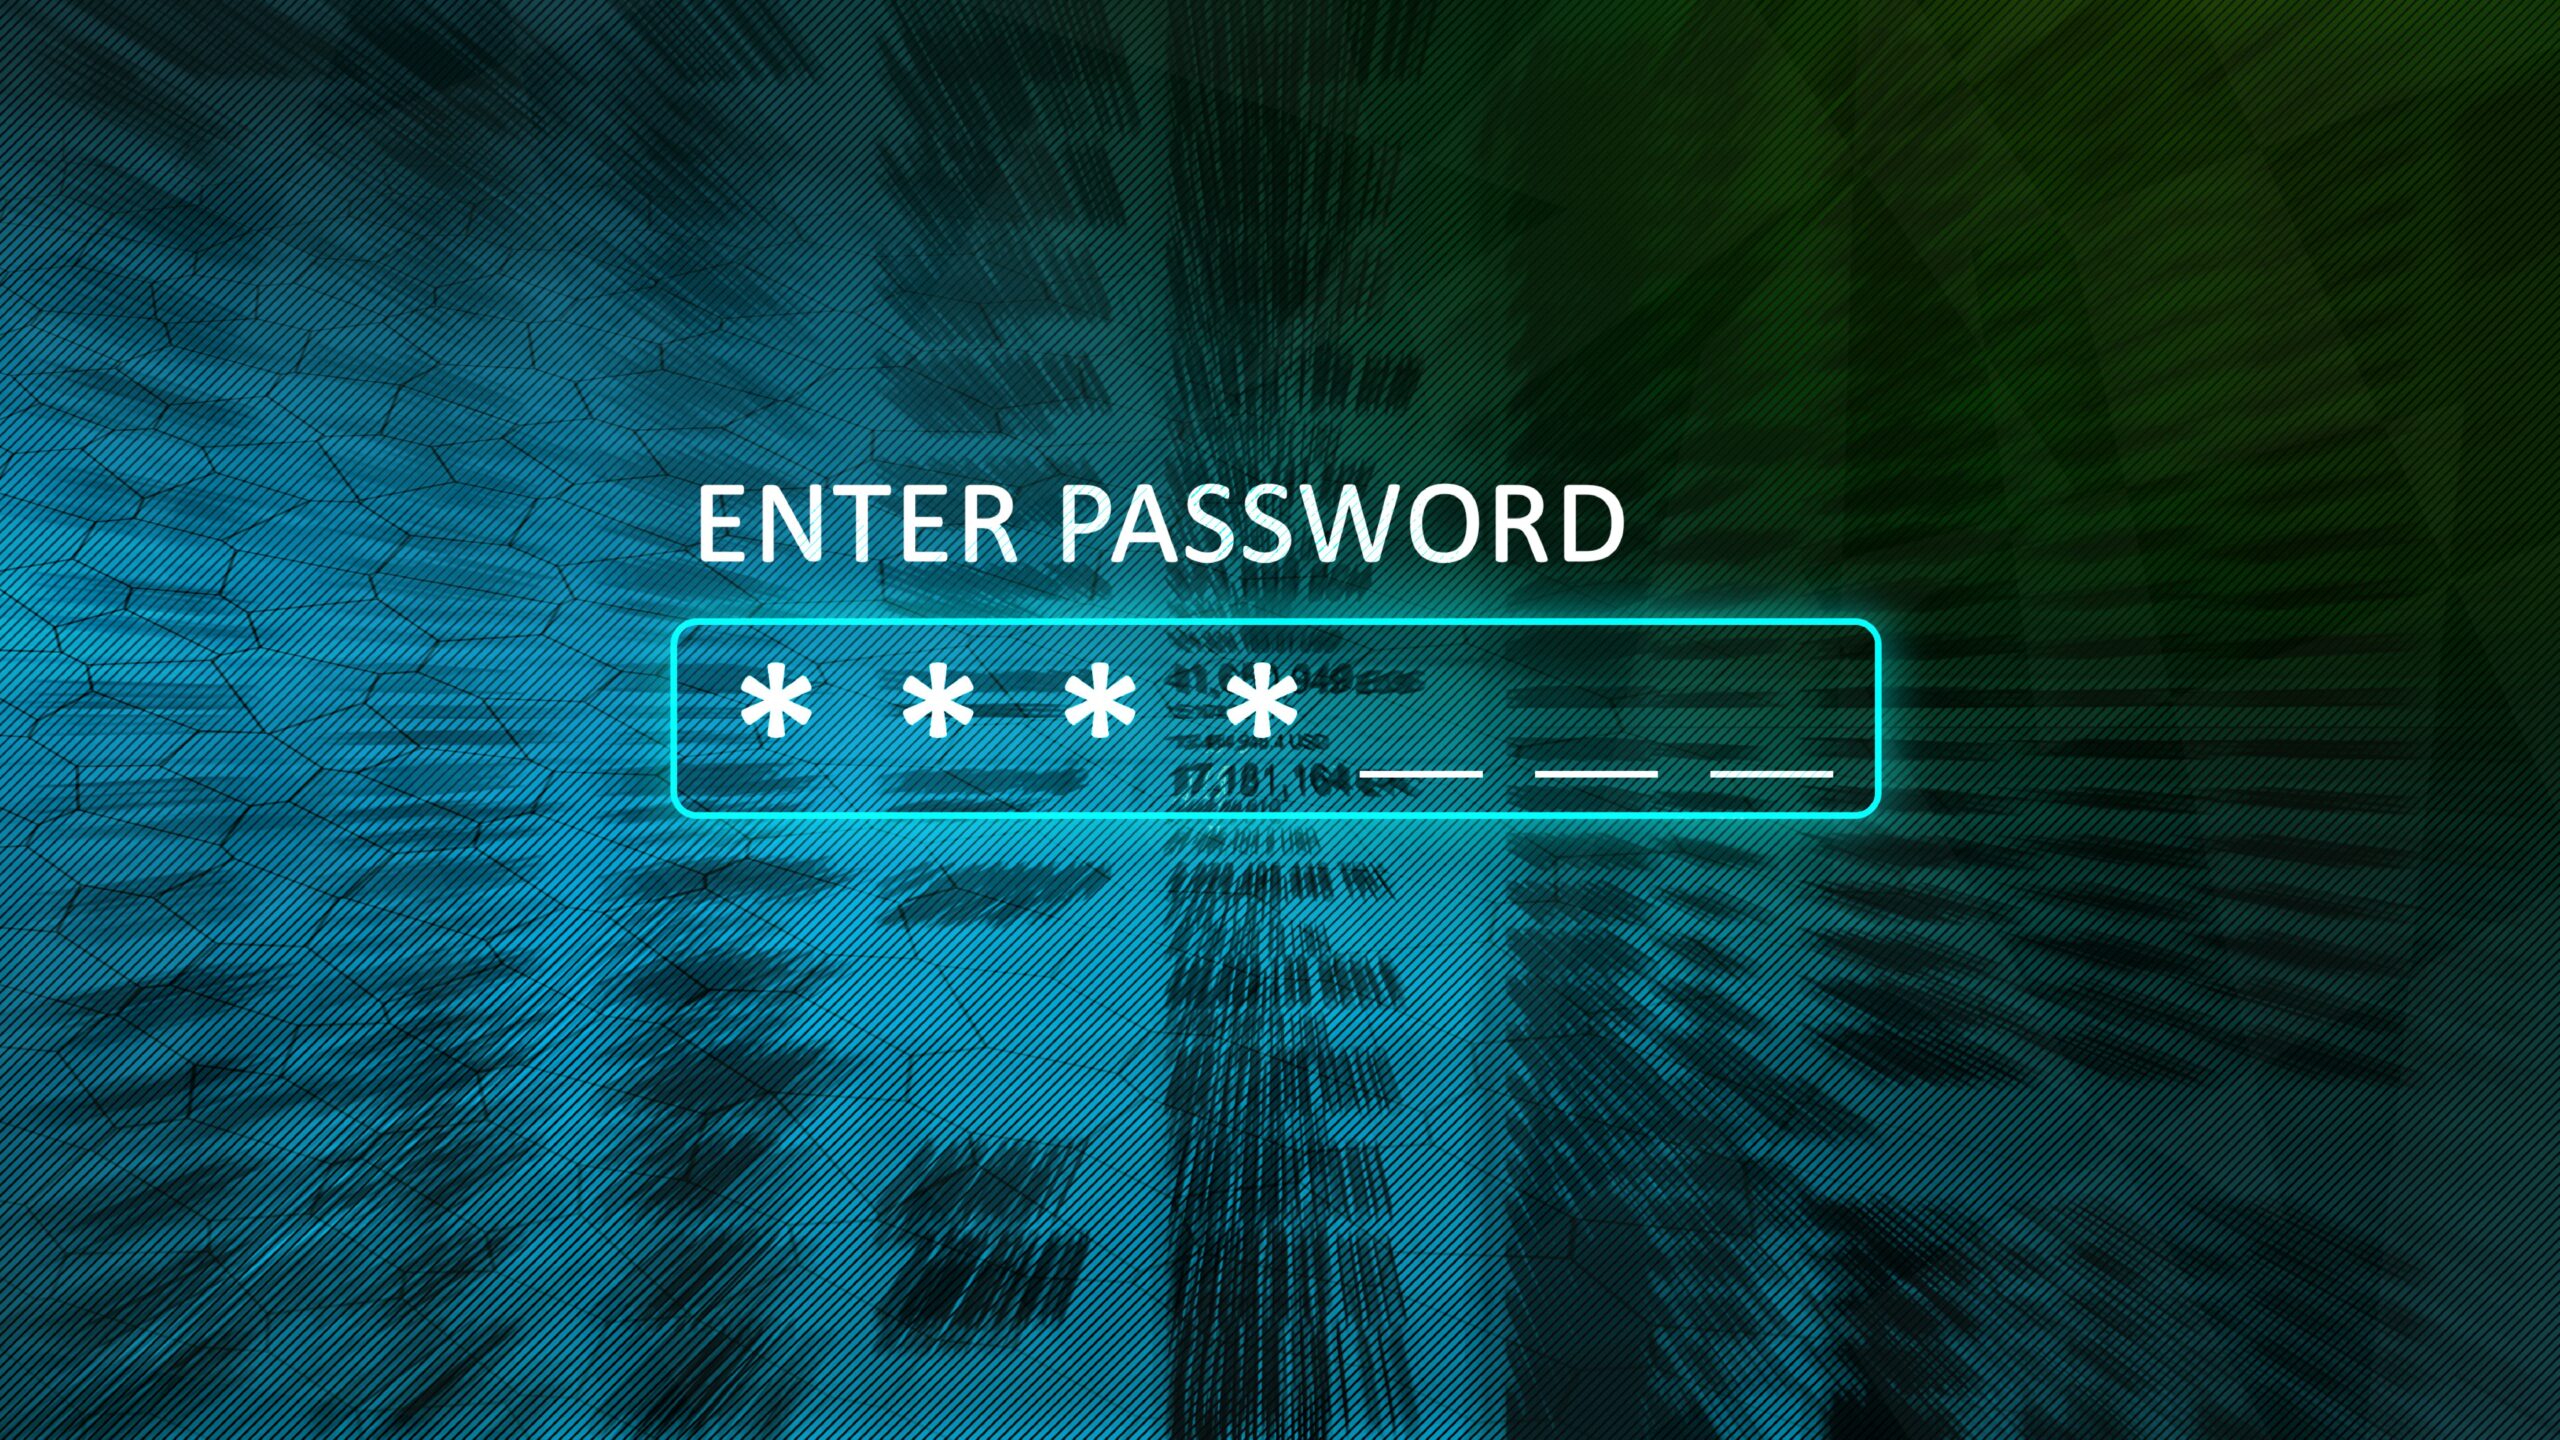 Enter password again. Enter password. Пароль фото. Enter password обои. System password enter password.